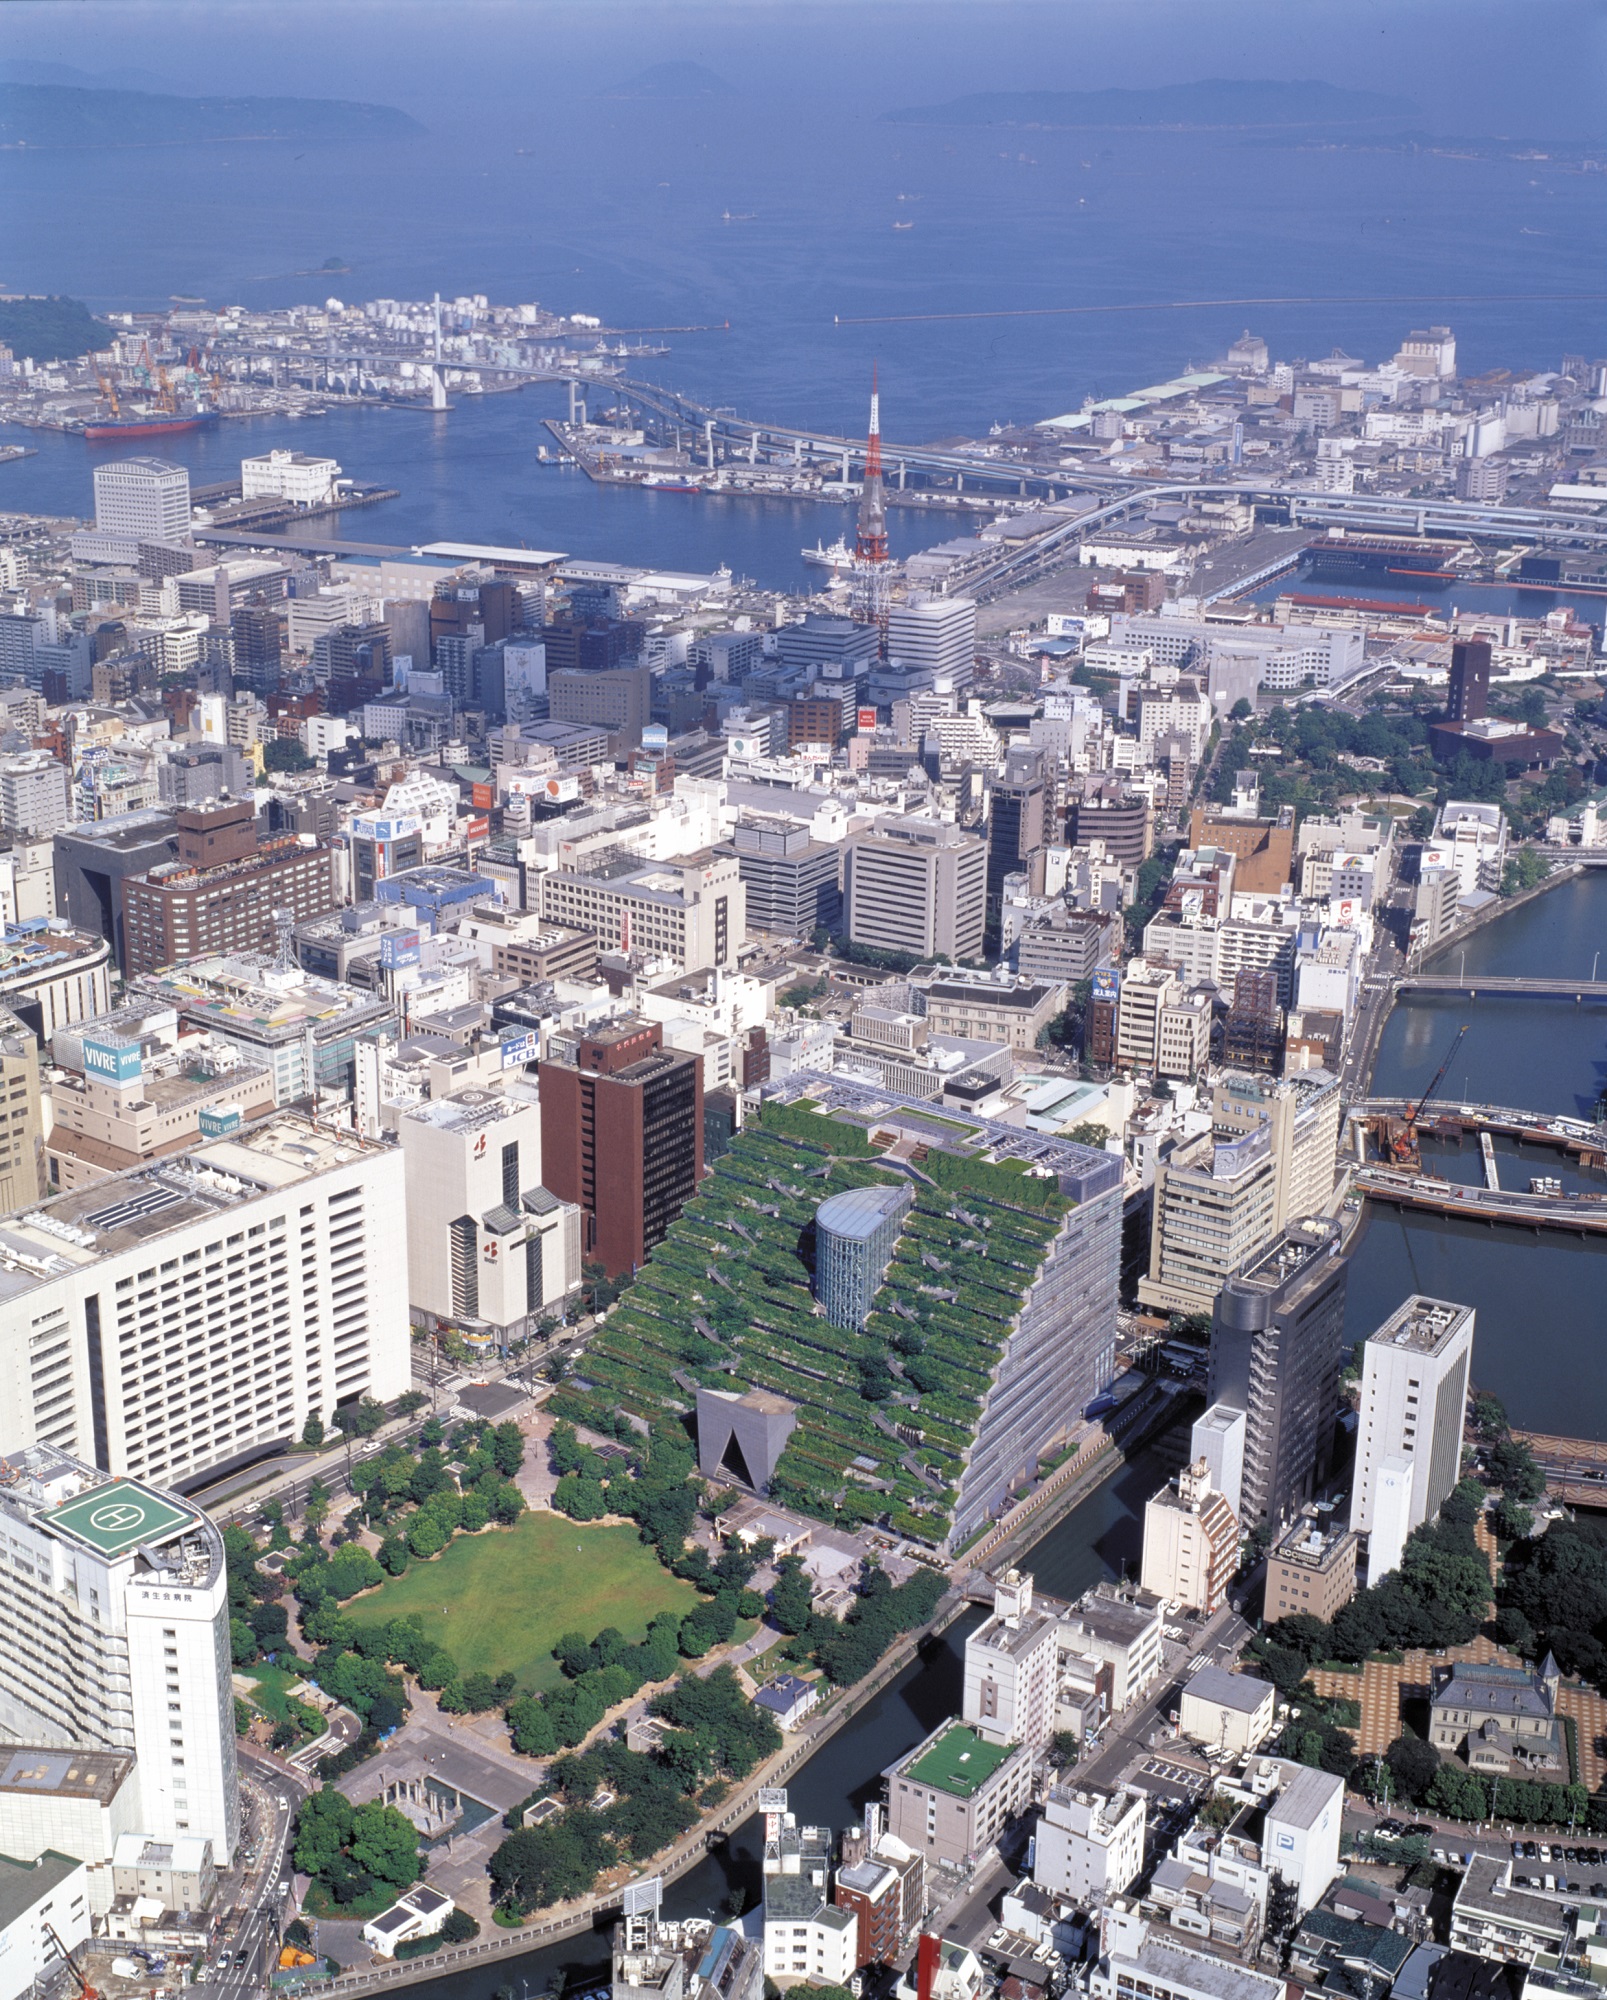 Emilio Ambasz (Argentine, born 1943). Prefectural International Hall, Fukuoka, Japan. 1990. Aerial view. 1990. Collection Emilio Ambasz. Photograph: Hiromi Watanabe